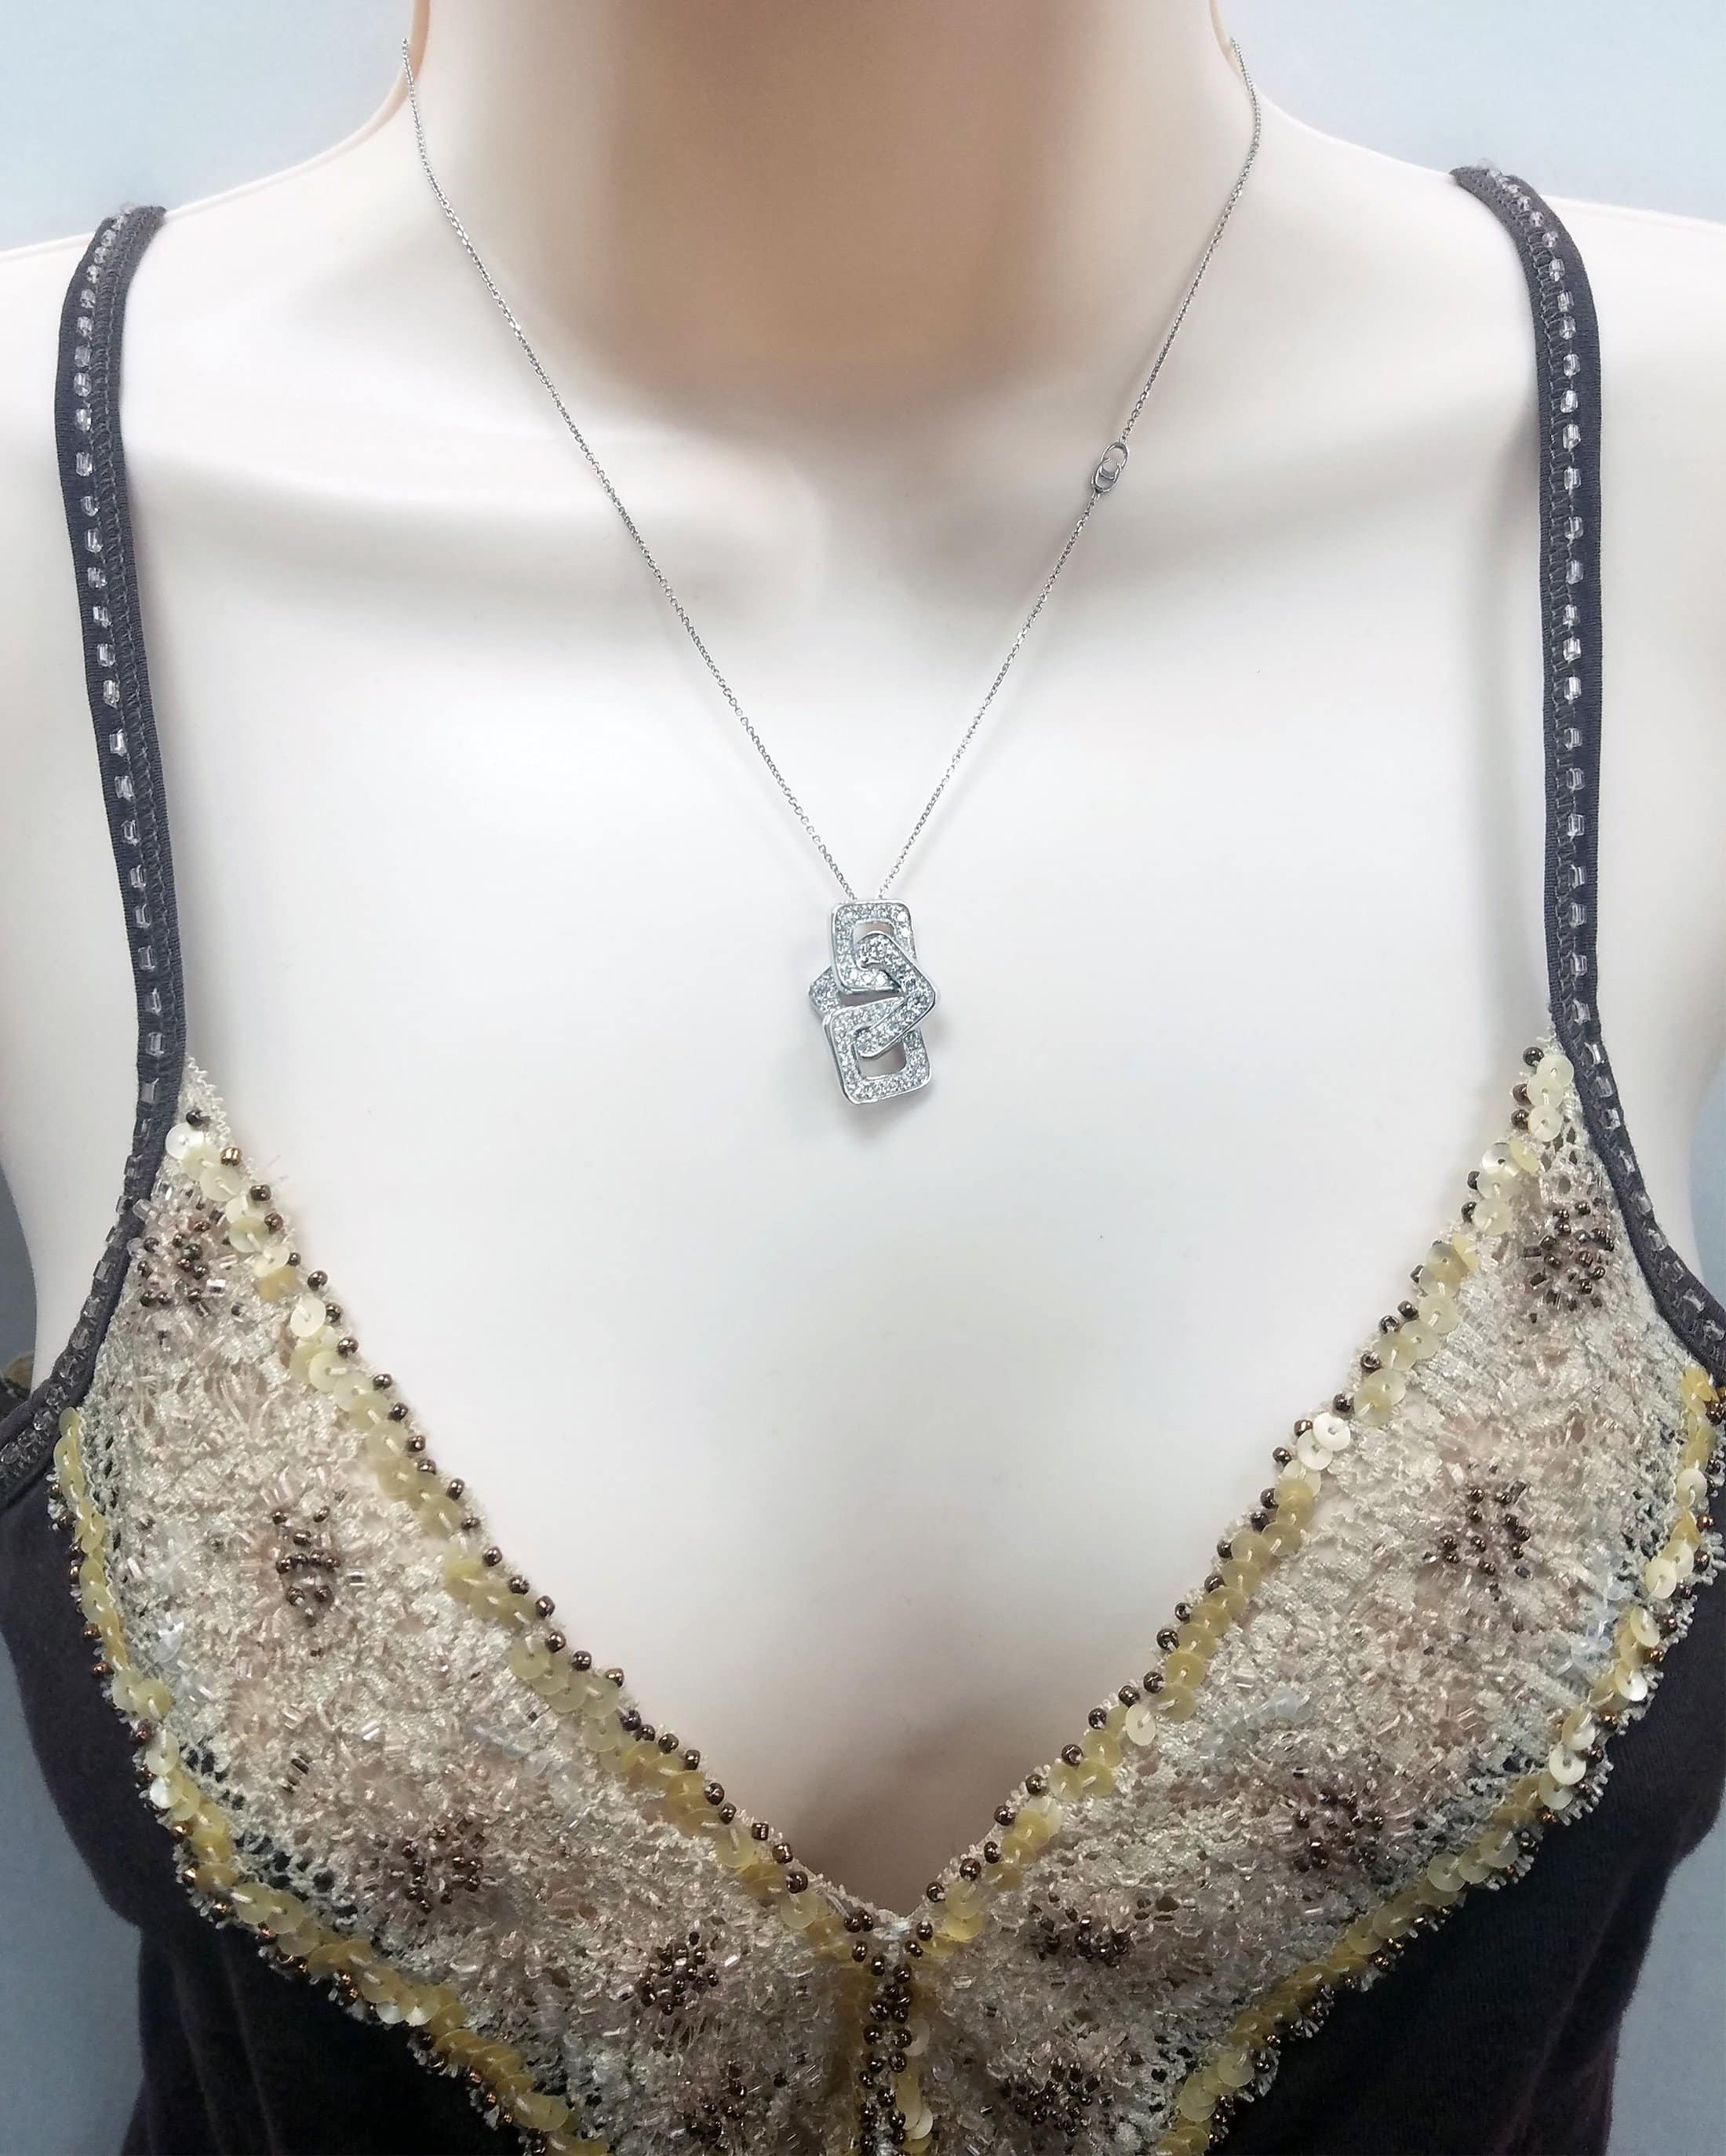 Chimento Link Diana .92 carat pave diamond necklace in 18k white gold